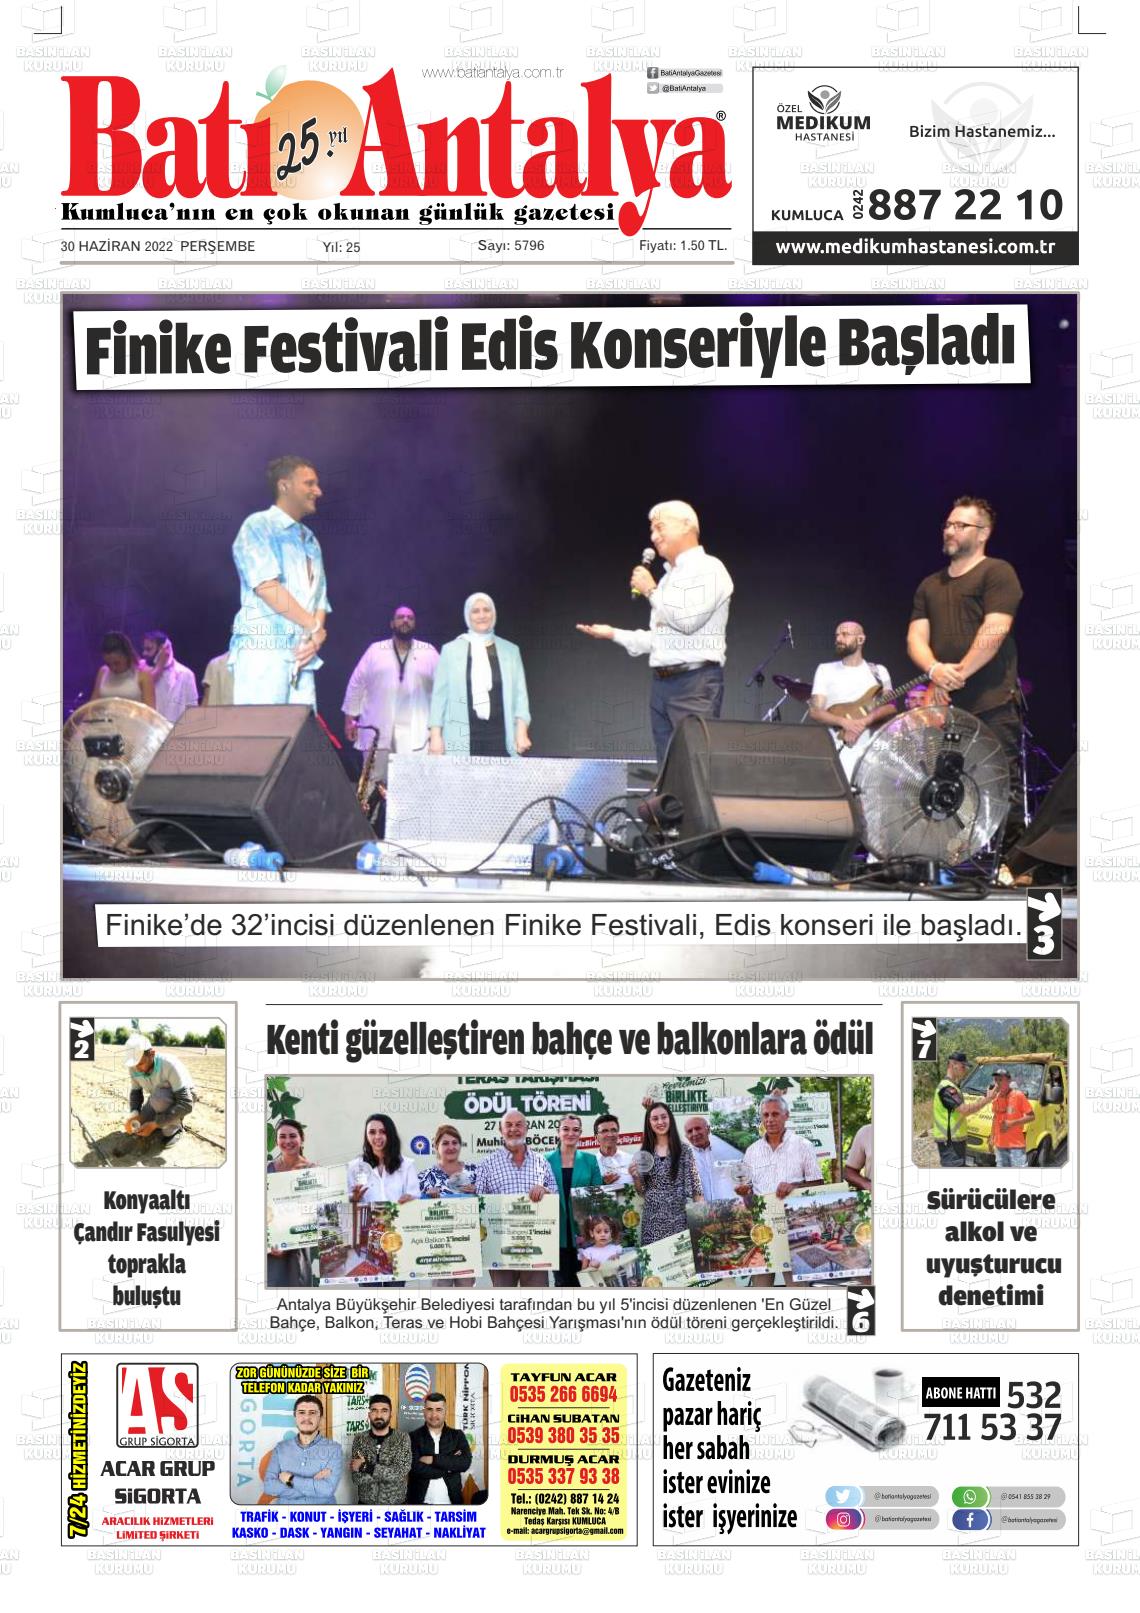 30 Haziran 2022 Batı Antalya Gazete Manşeti